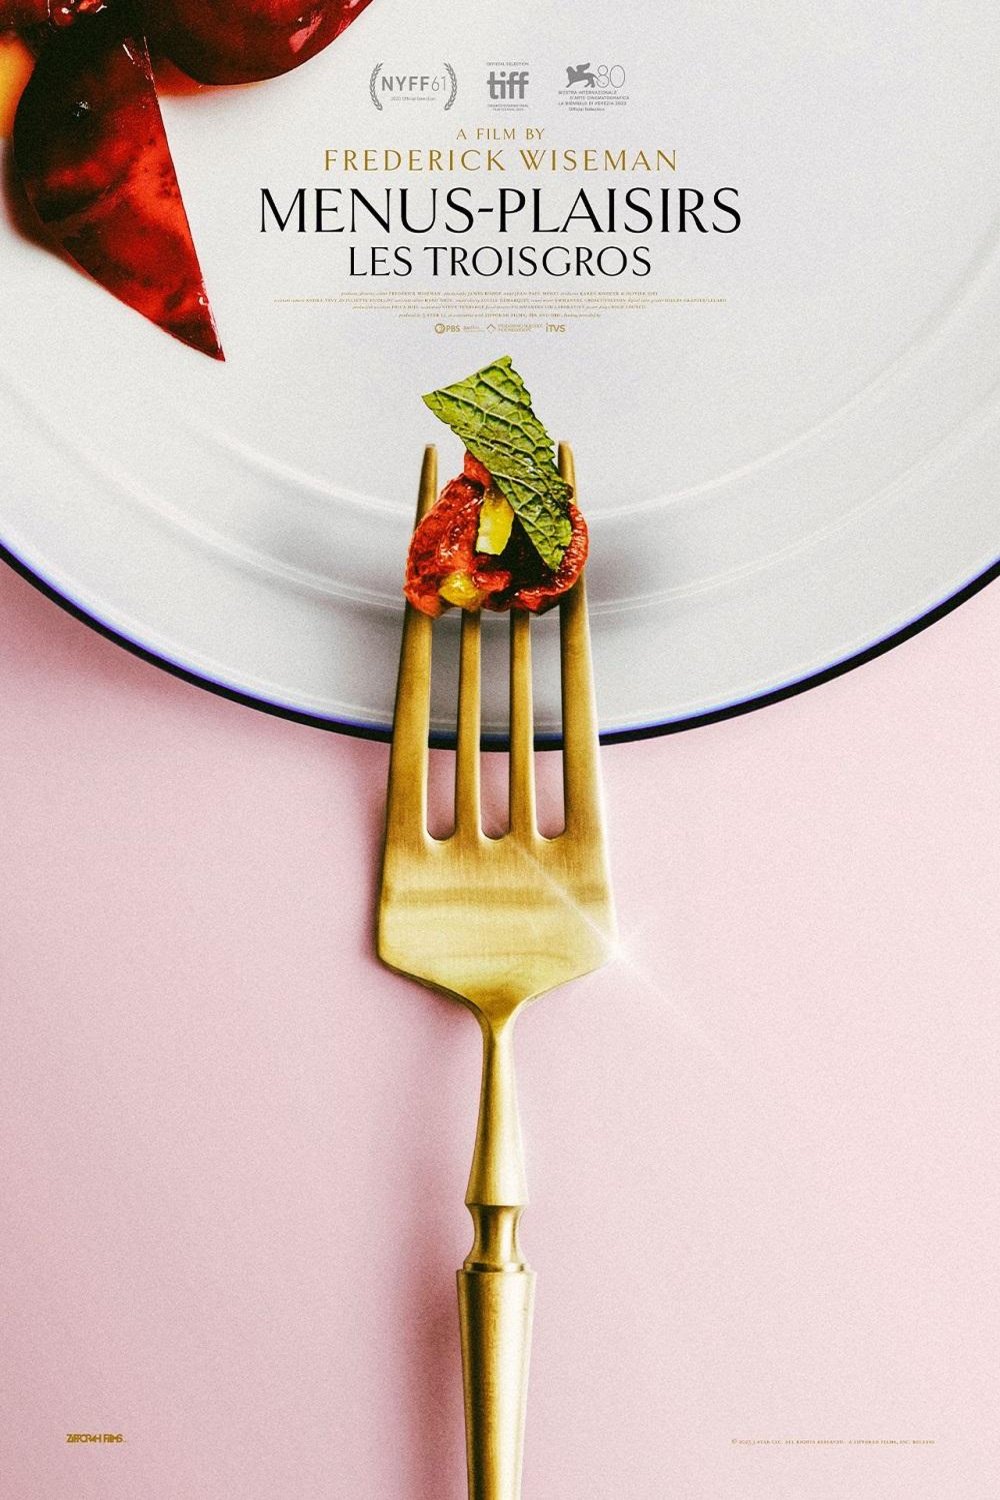 Poster of the movie Menus-plaisirs - Les Troisgros